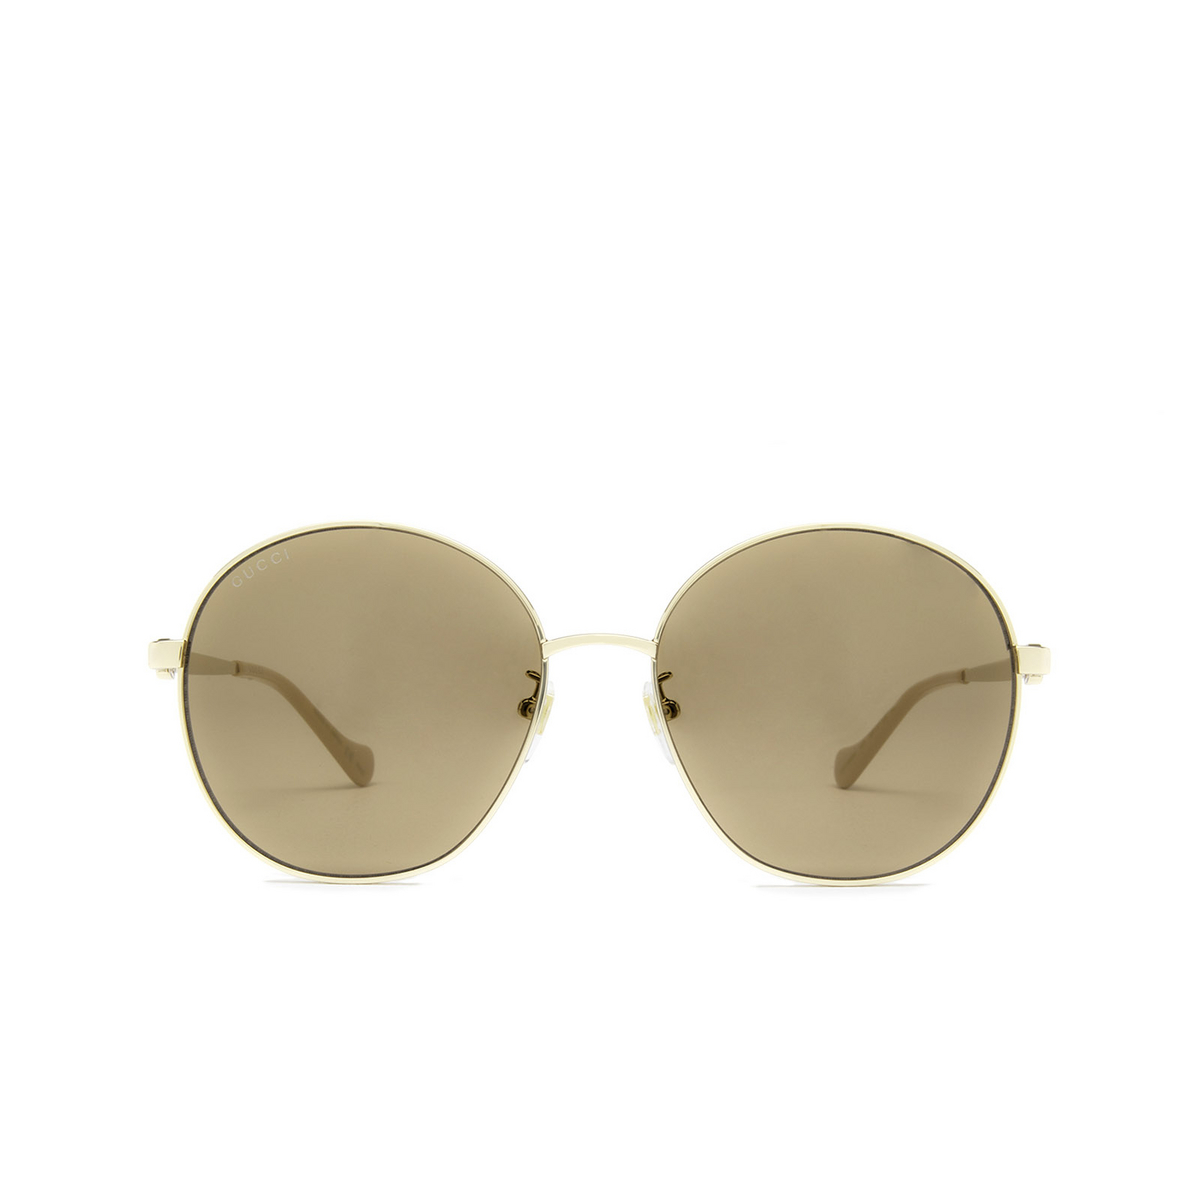 Gucci® Round Sunglasses: GG1090SA color Gold 003 - front view.